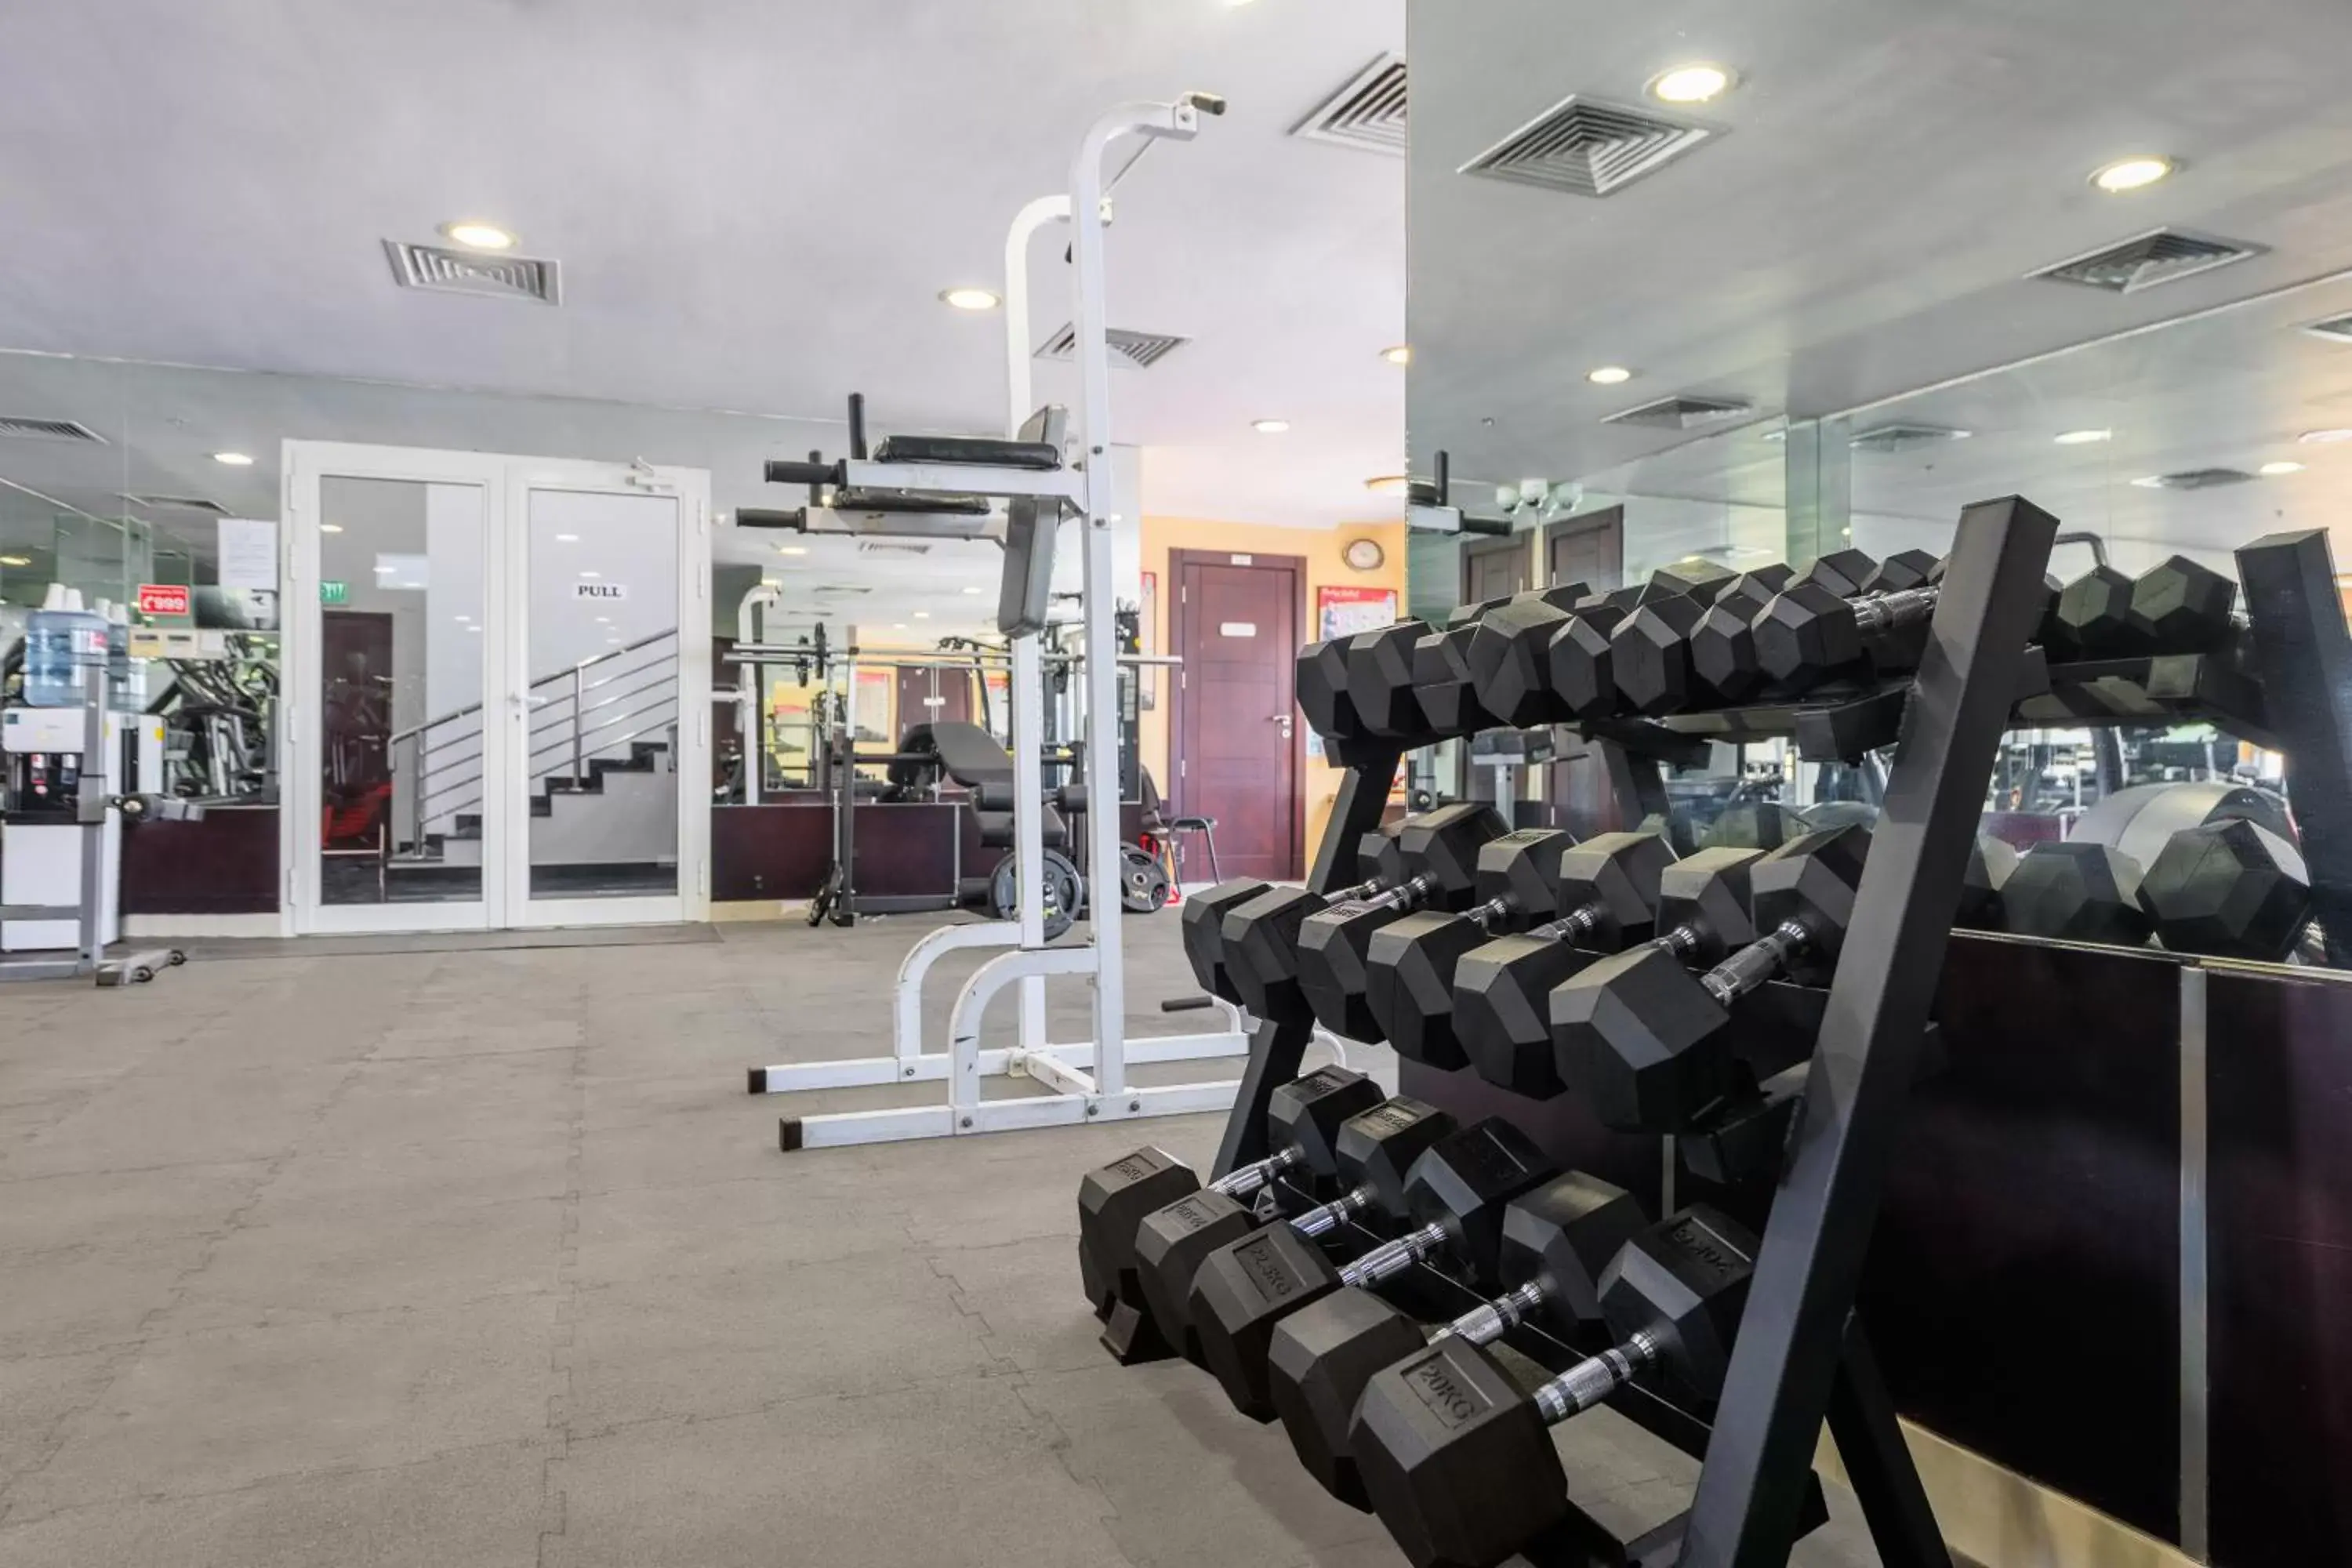 Fitness centre/facilities, Fitness Center/Facilities in Plaza Inn Doha